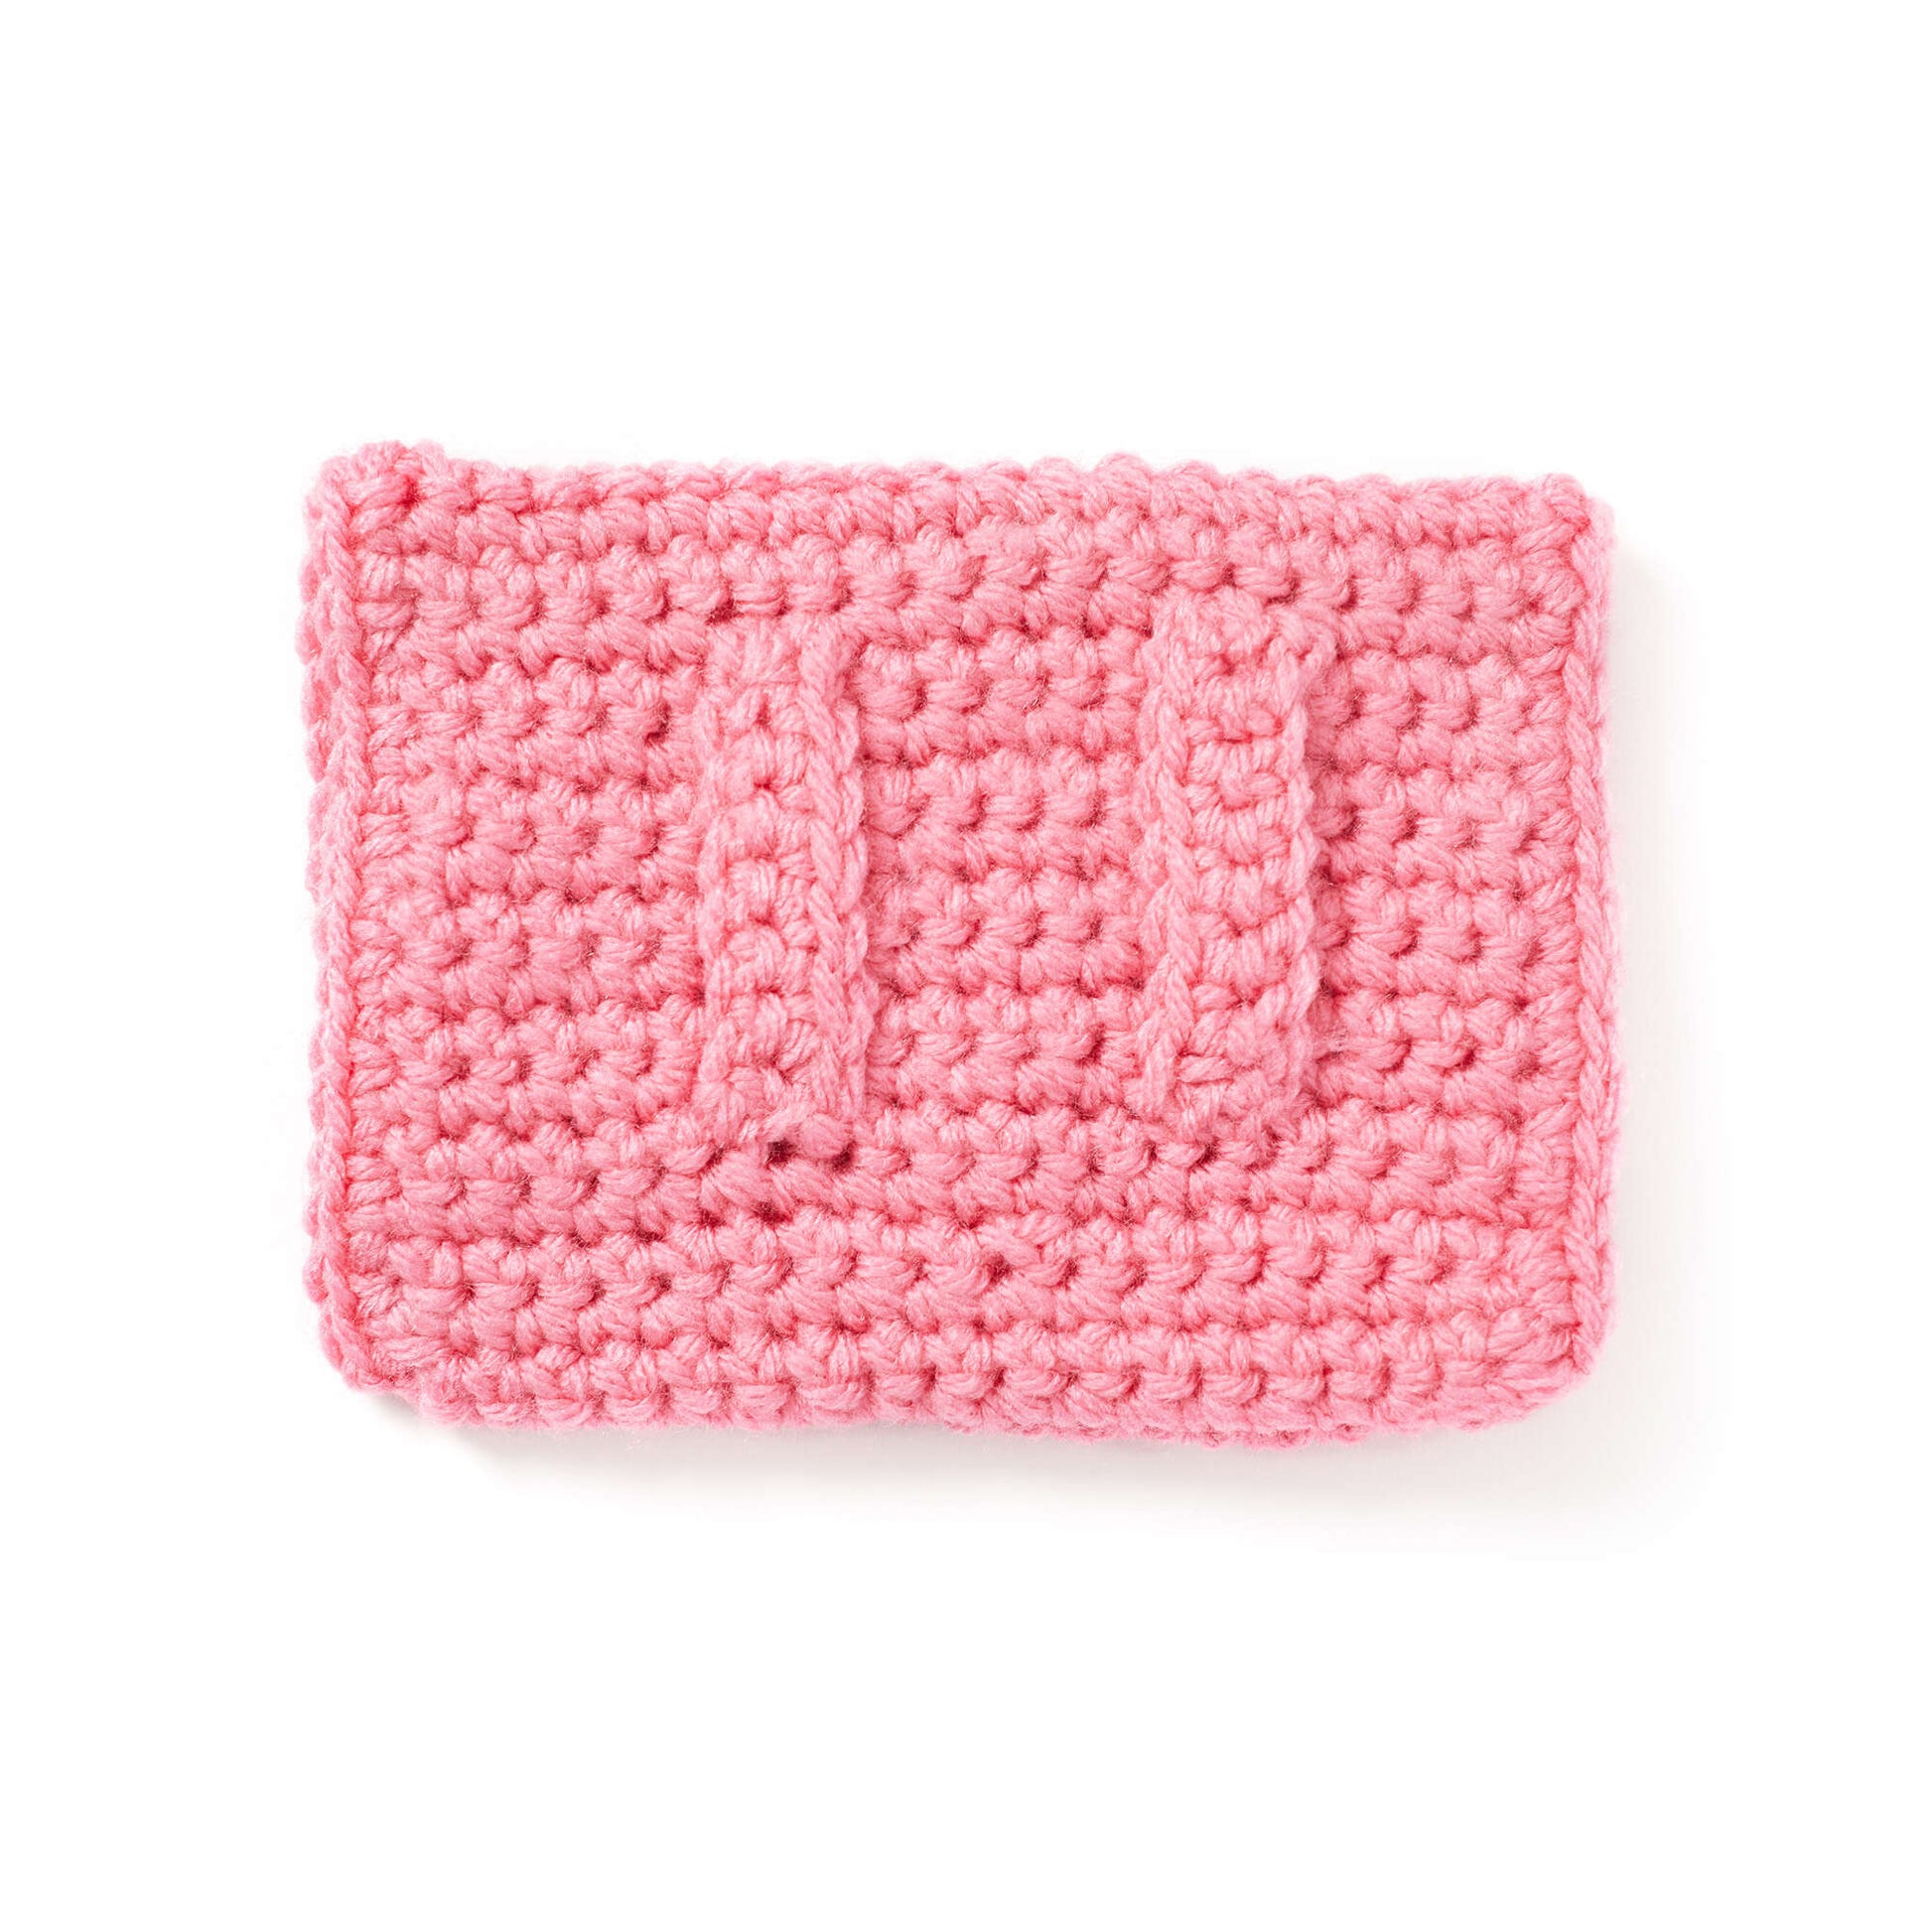 Free Red Heart Parent & Child Belt Bags Crochet Pattern